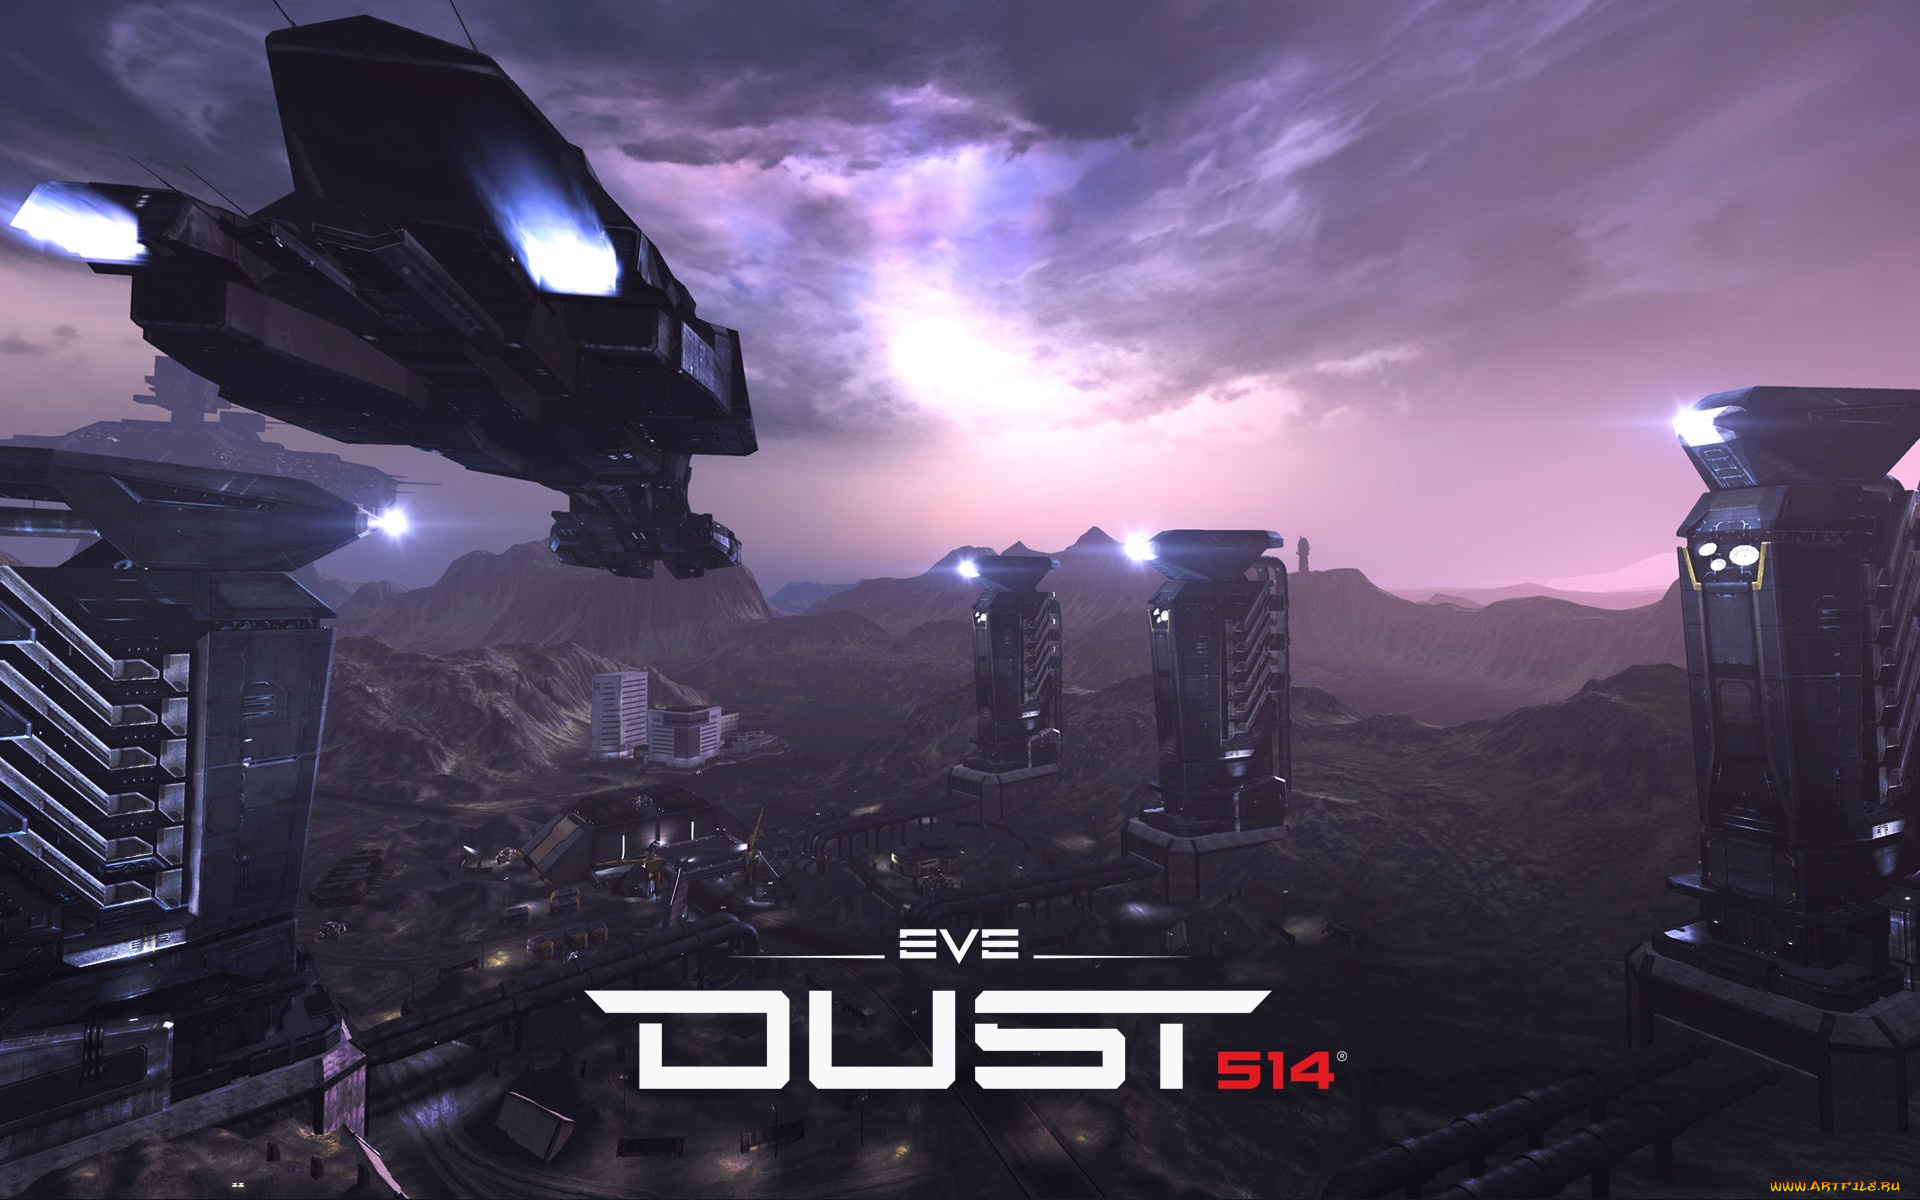 dust, 514, видео, игры, игра